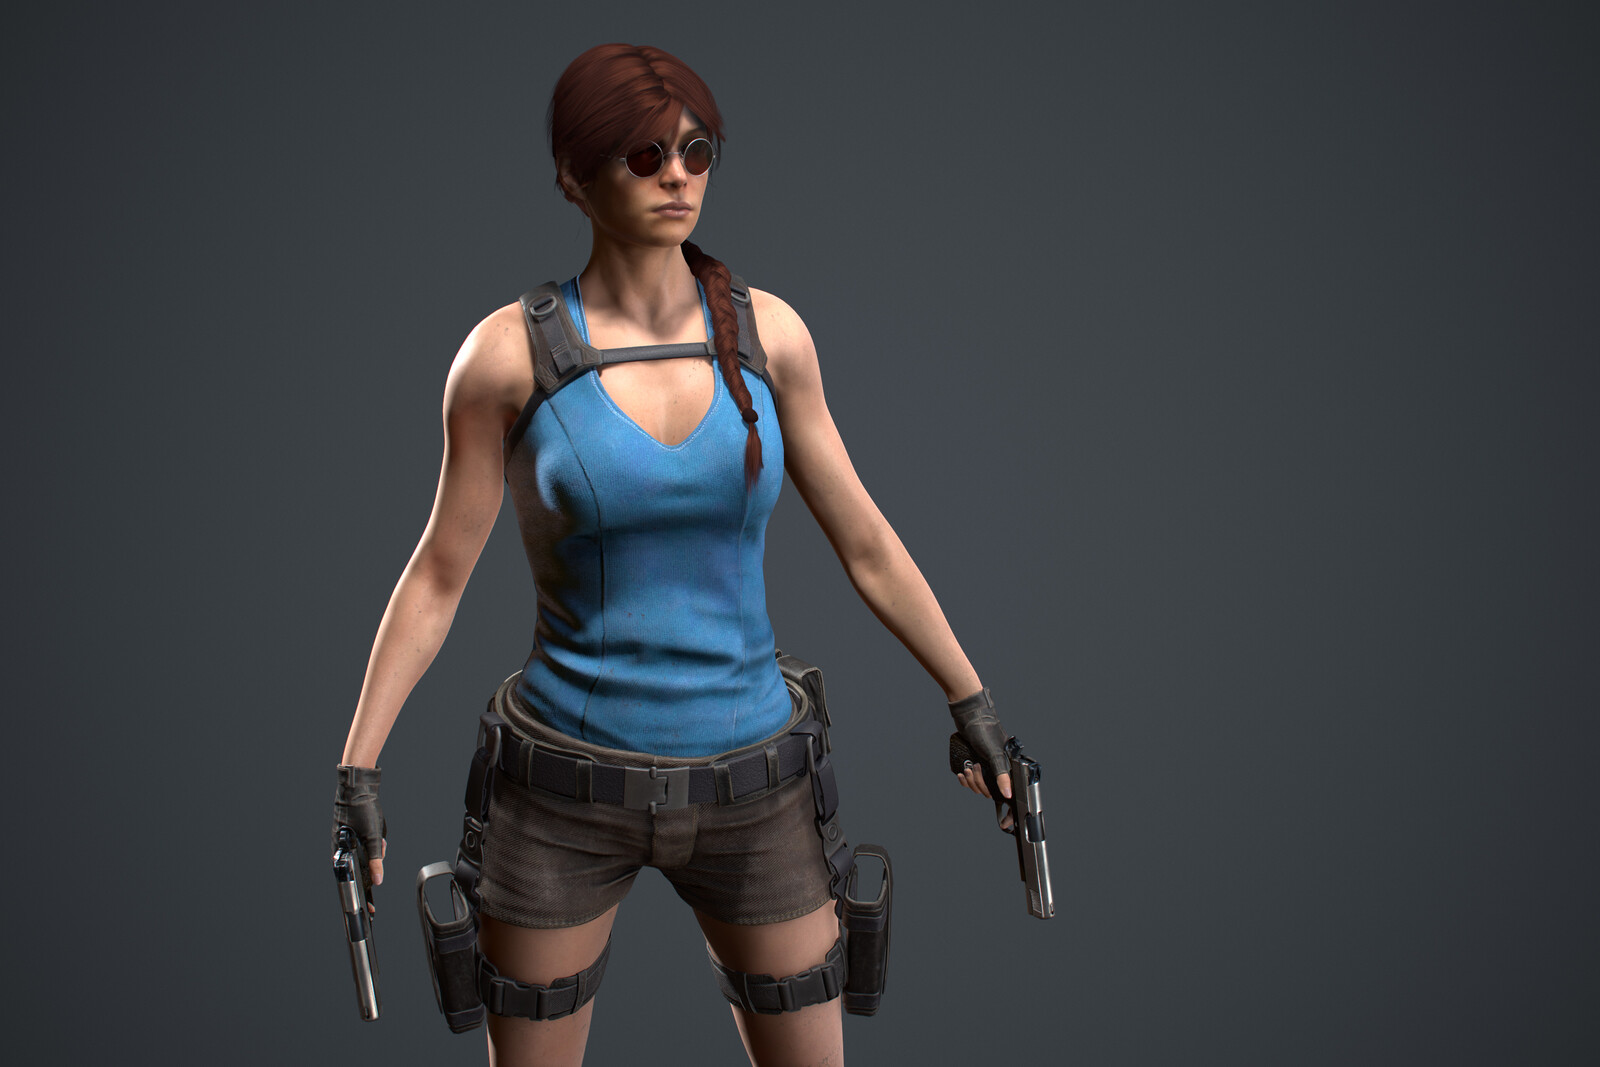 How to get Ashs Lara Croft skin in Rainbow Six Siege 